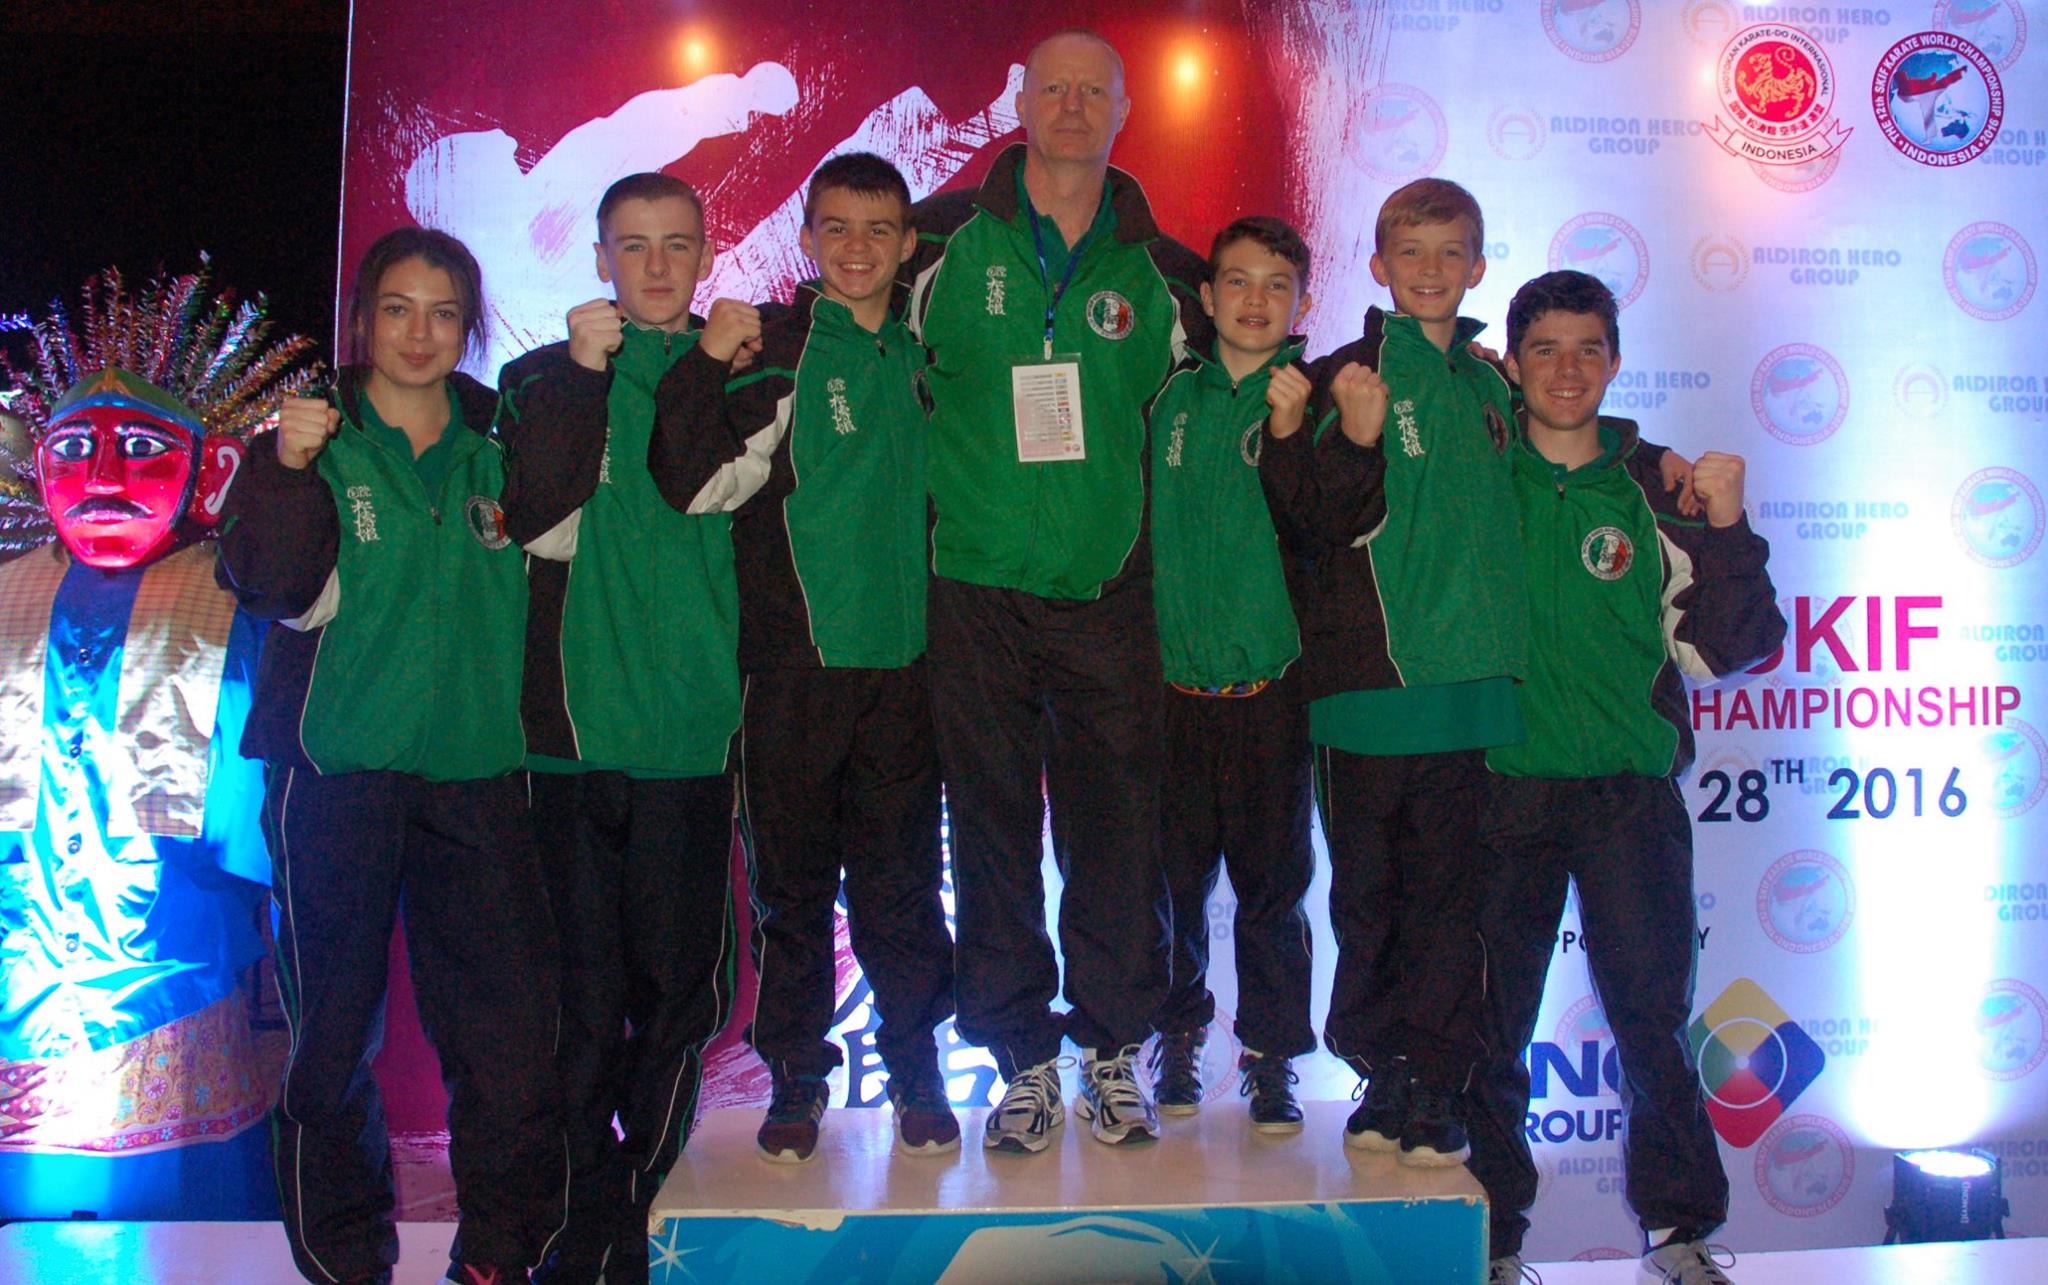 SKIF Ireland Juniors get first World Championships Experience